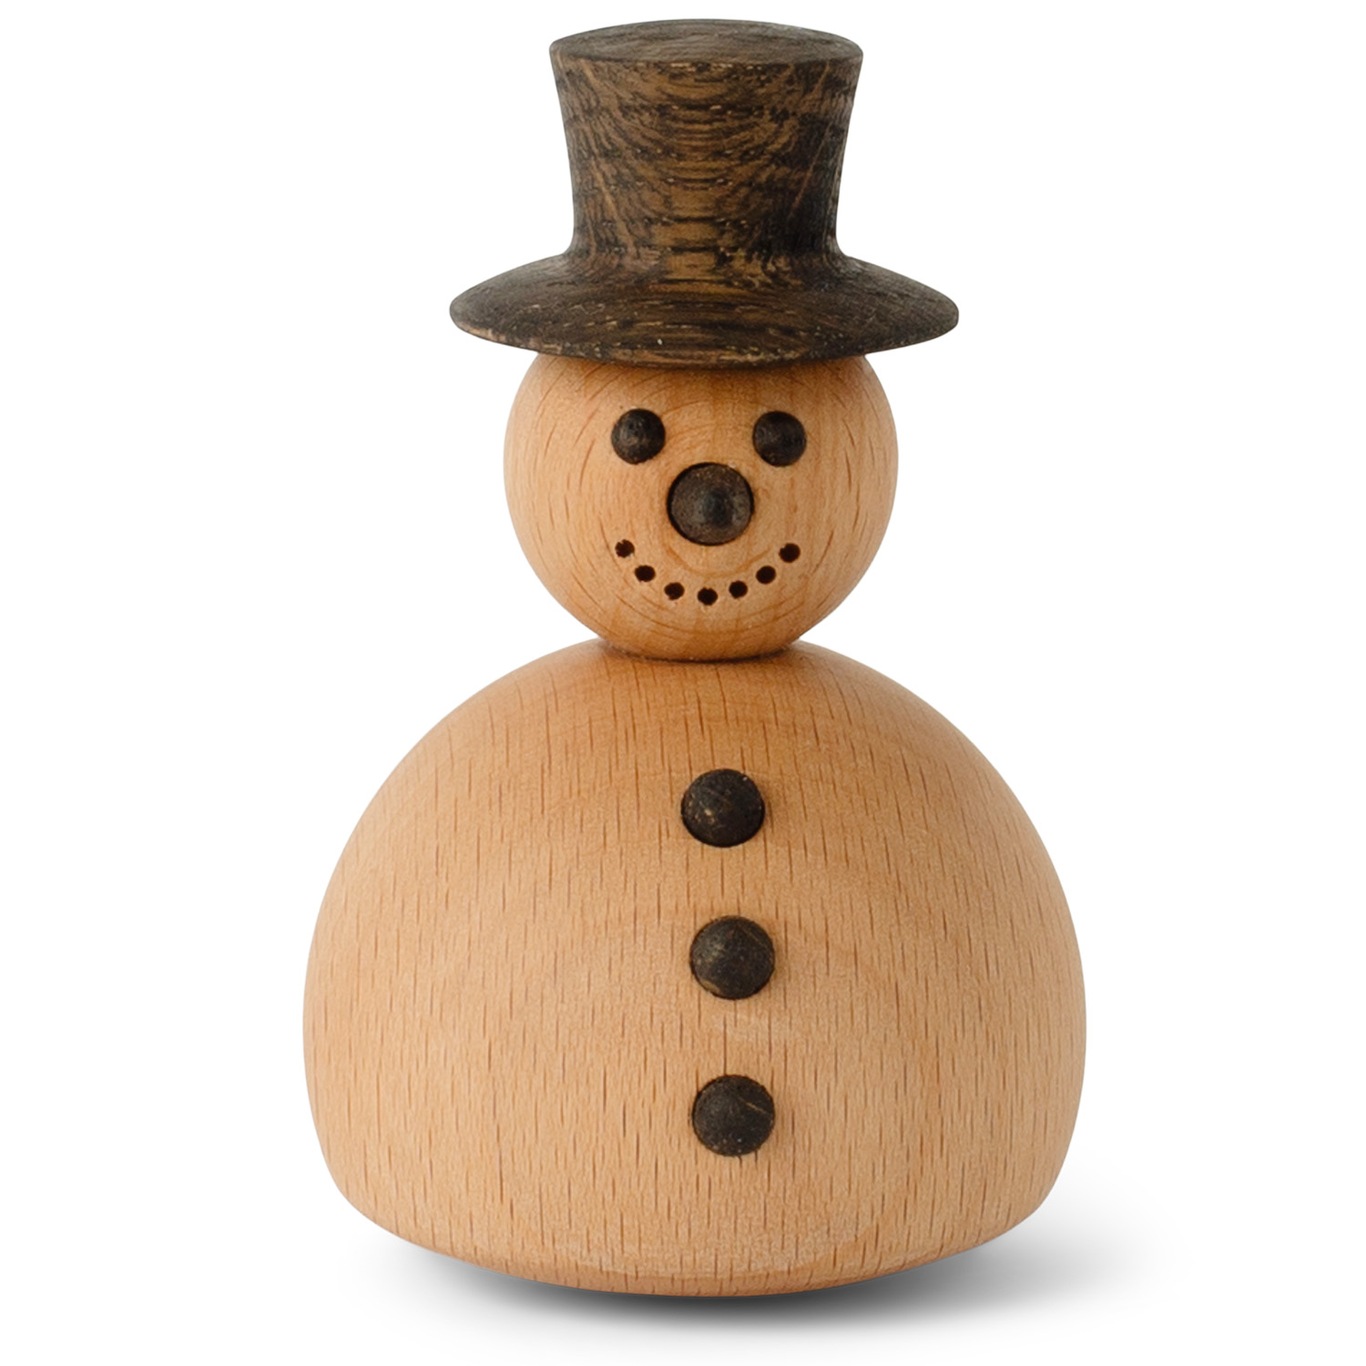 The Snowman Wooden Figurine 9.4 cm